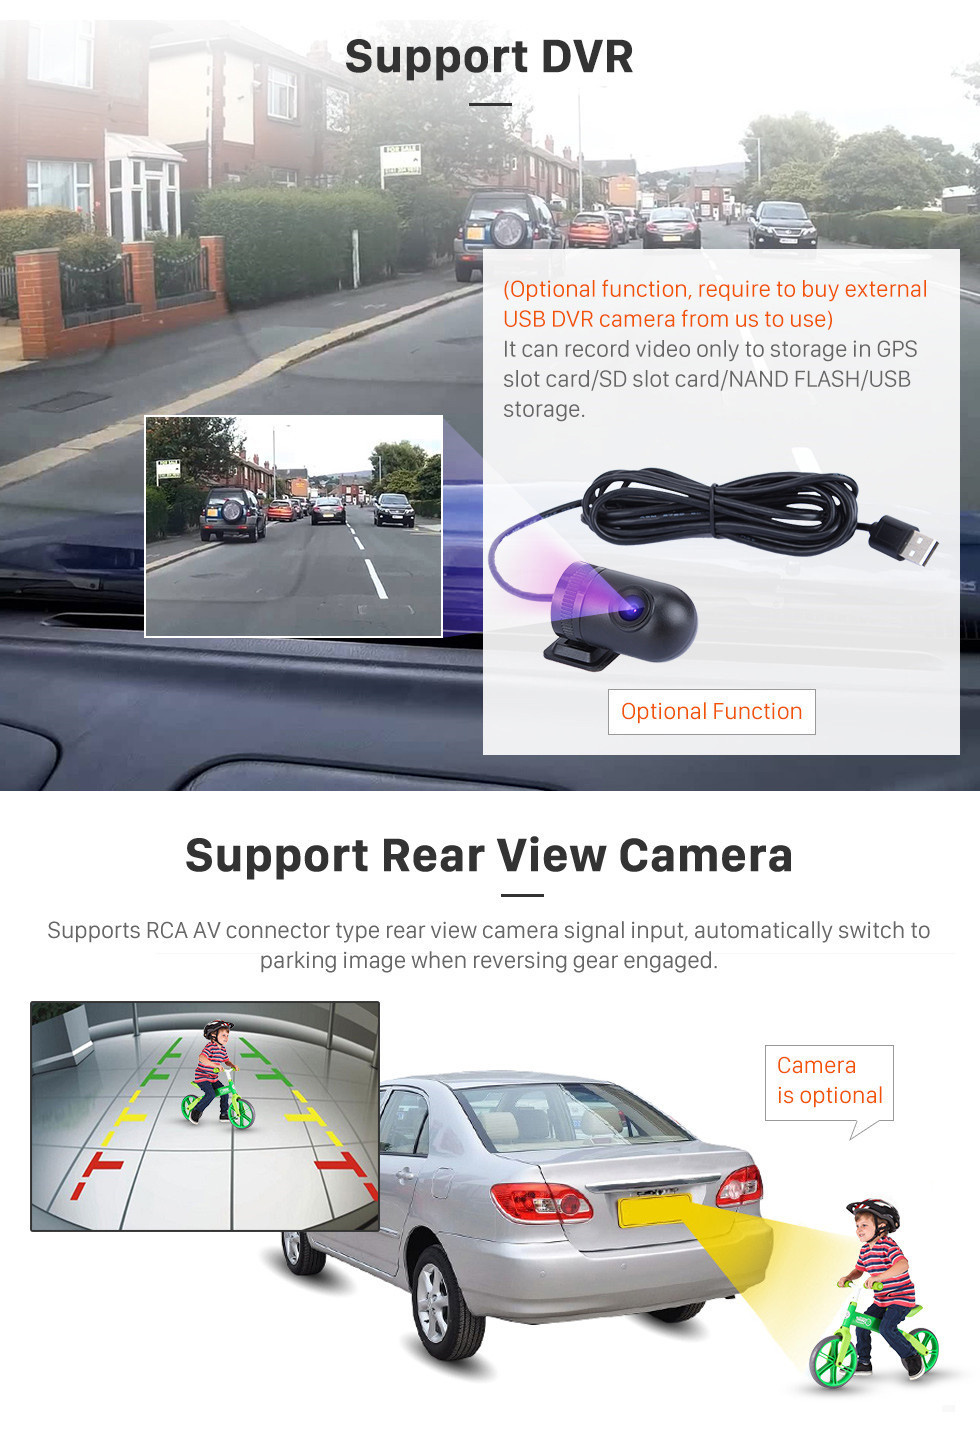 Seicane HD Touchscreen 2010-2019 Kia Carnival Android 12.0 9 inch GPS Navigation Radio Bluetooth AUX Carplay support DAB+ OBD2 Rear camera